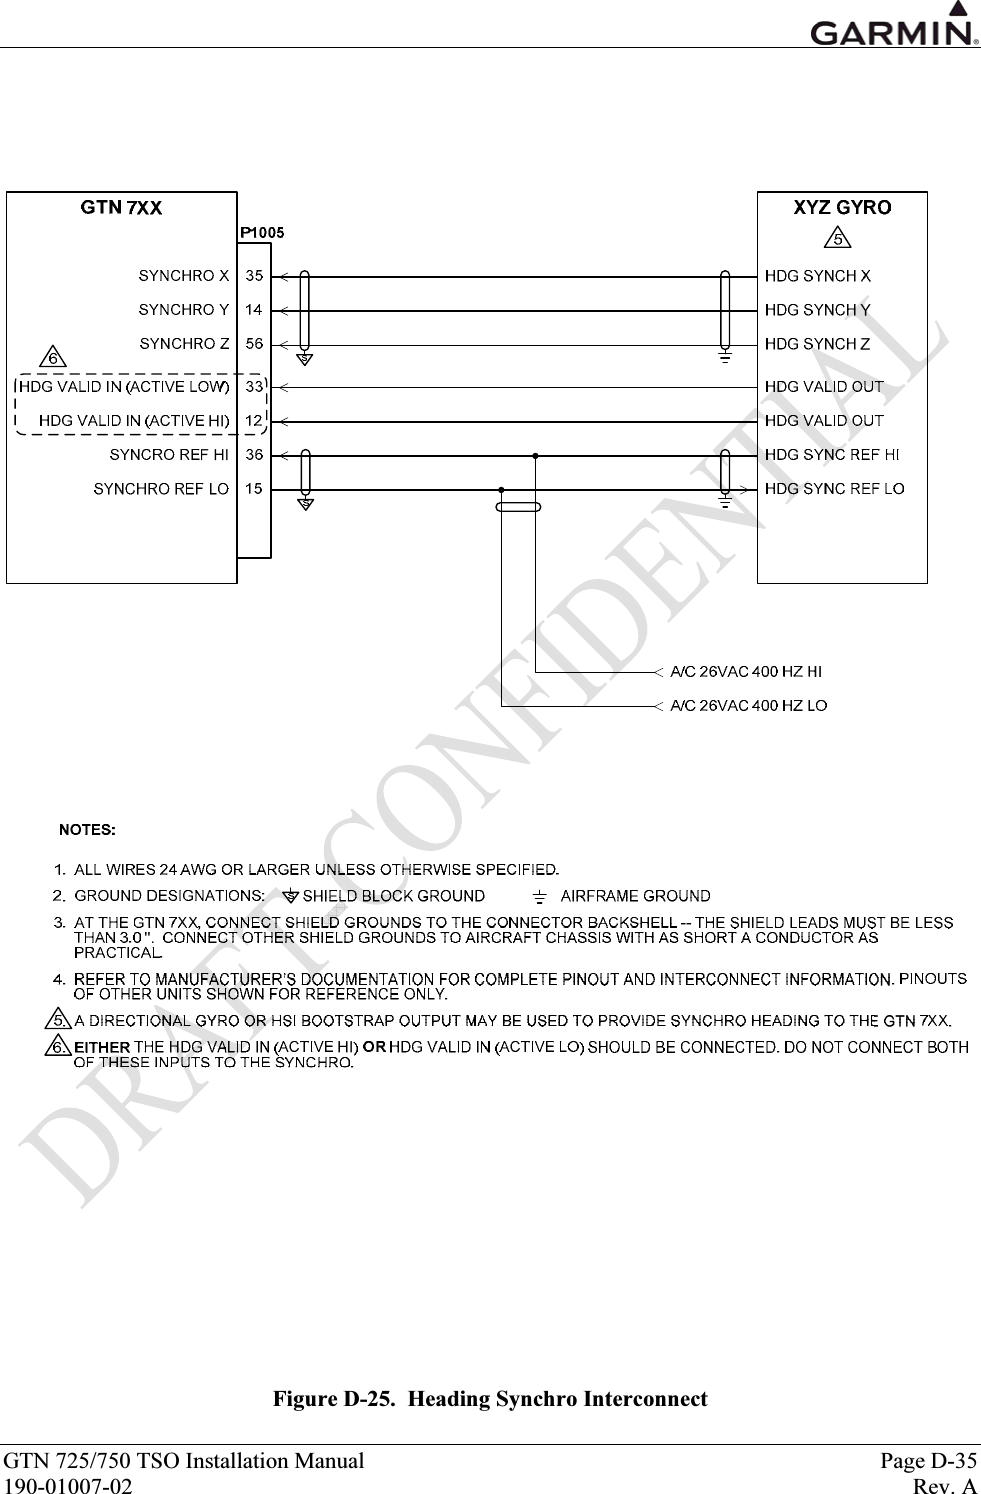  GTN 725/750 TSO Installation Manual  Page D-35 190-01007-02  Rev. A  Figure D-25.  Heading Synchro Interconnect 